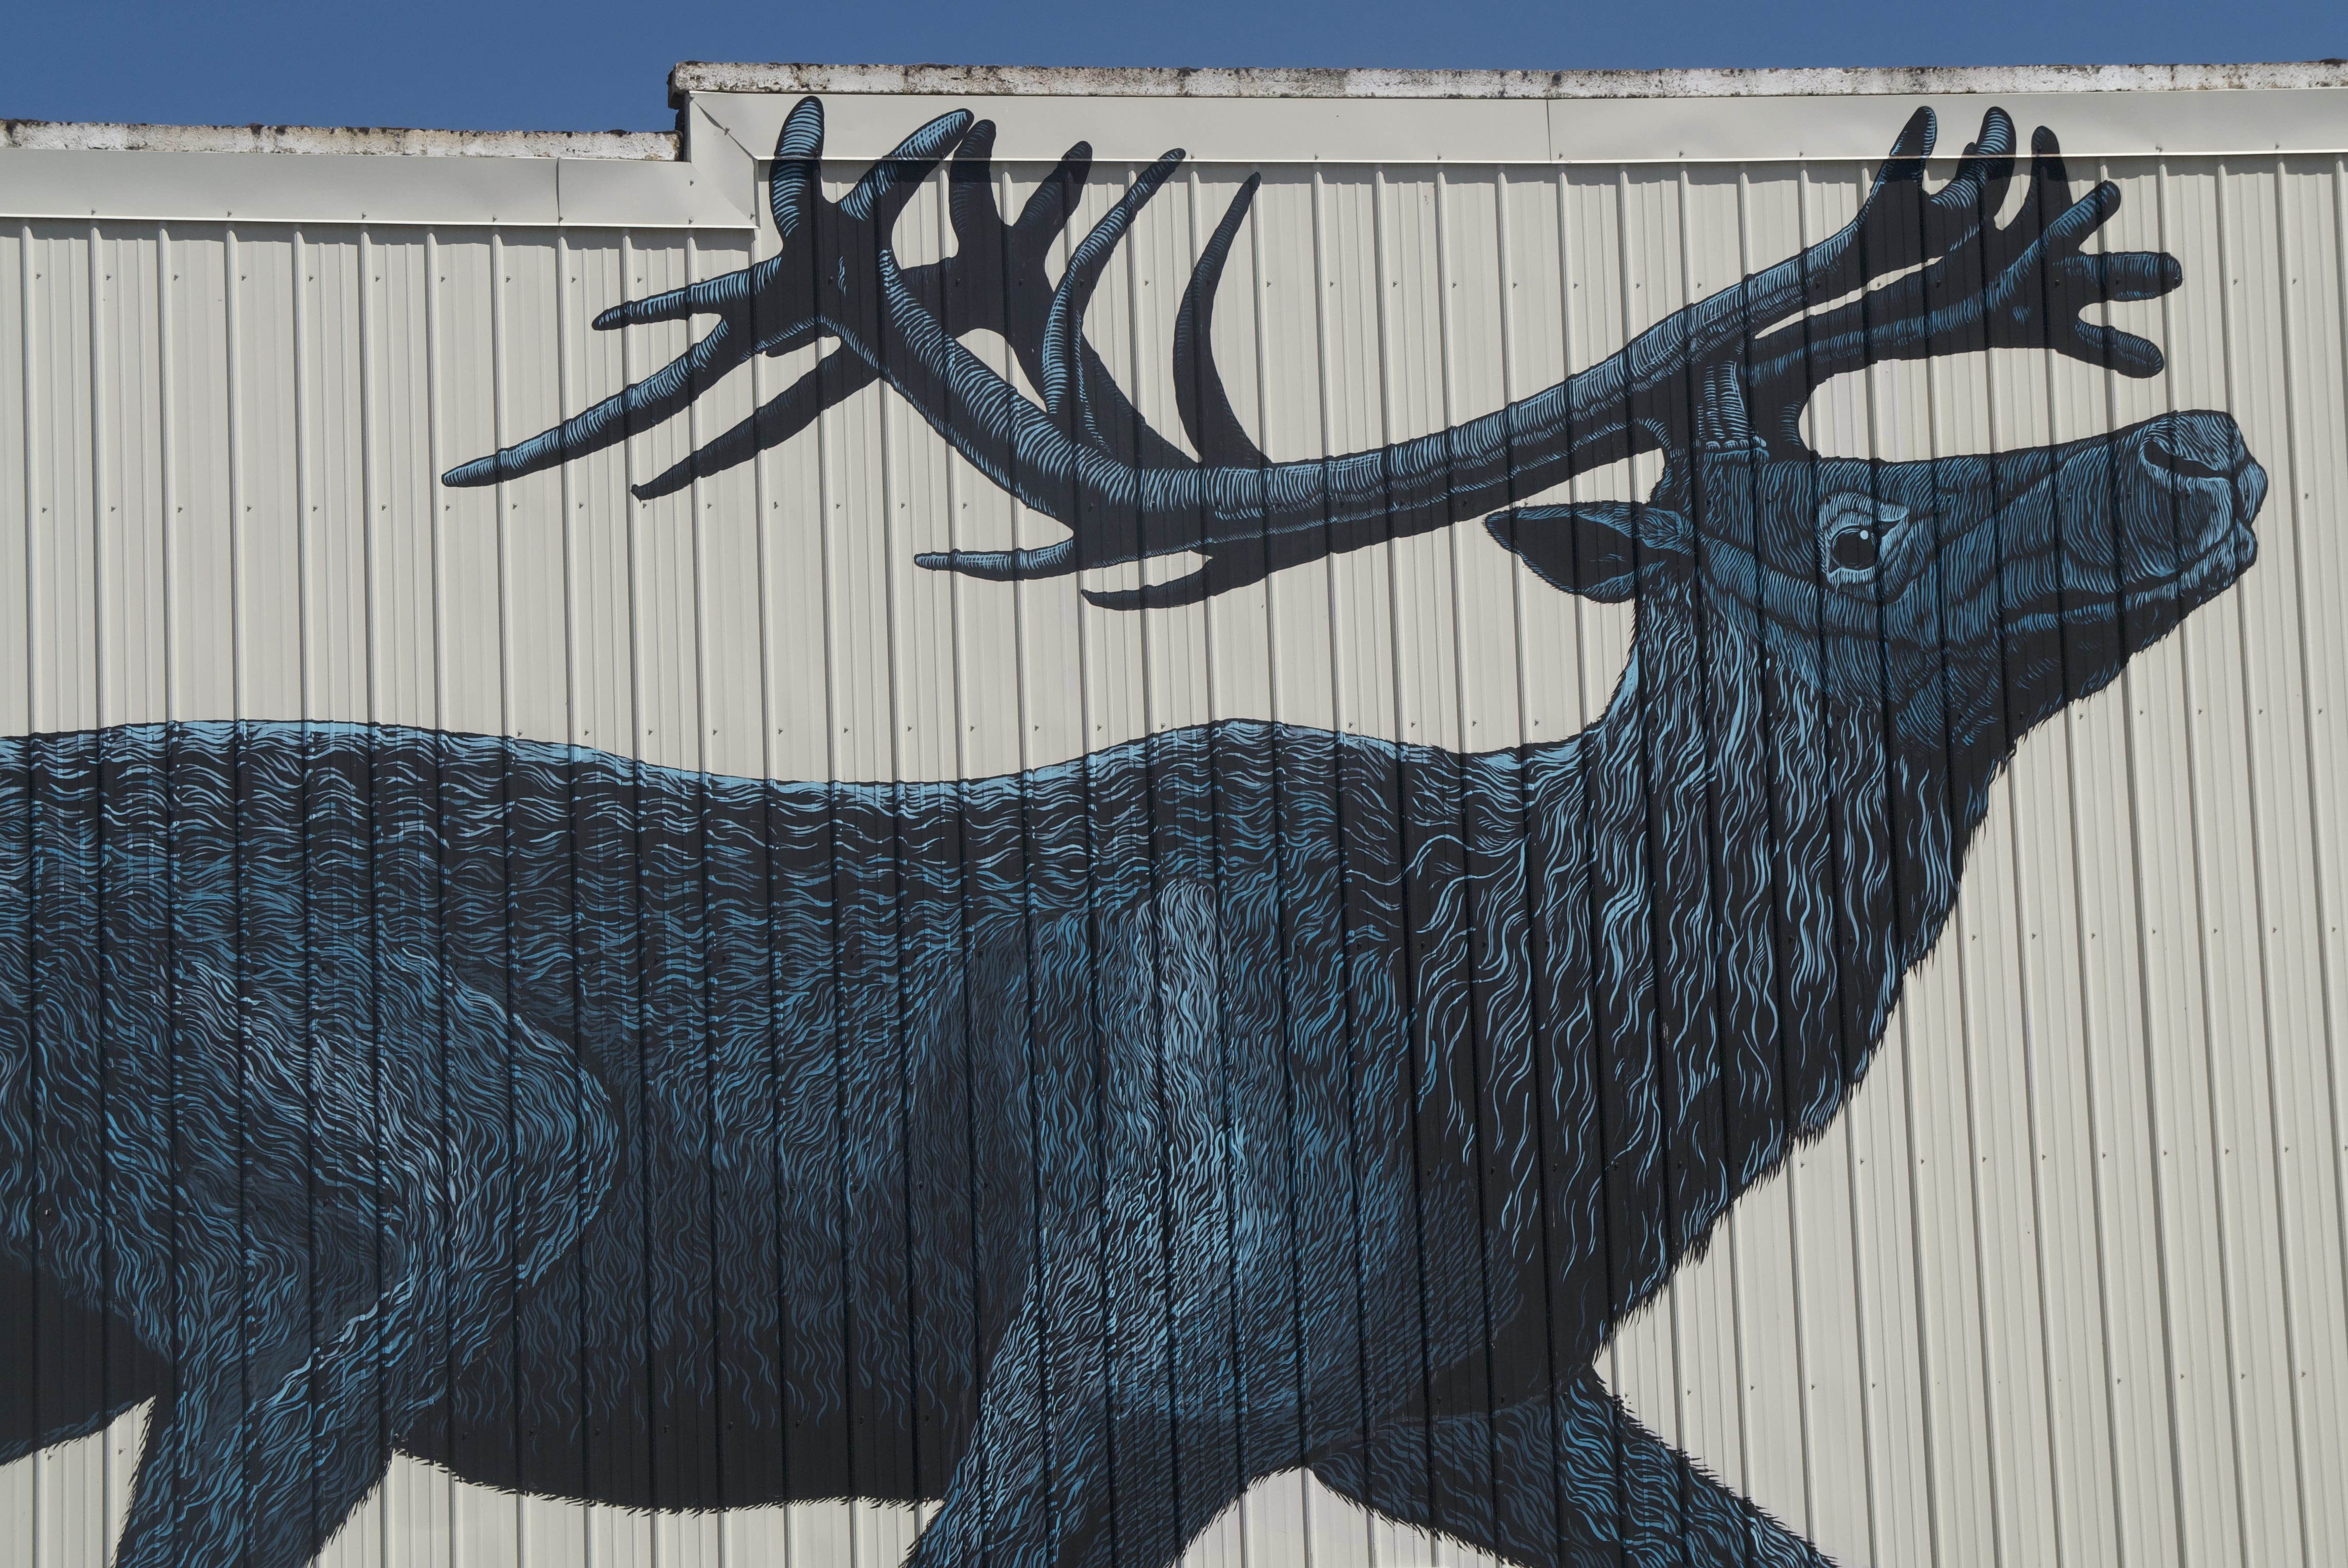 Caribou mural in Sandpoint, Idaho, by artist Roger Peet